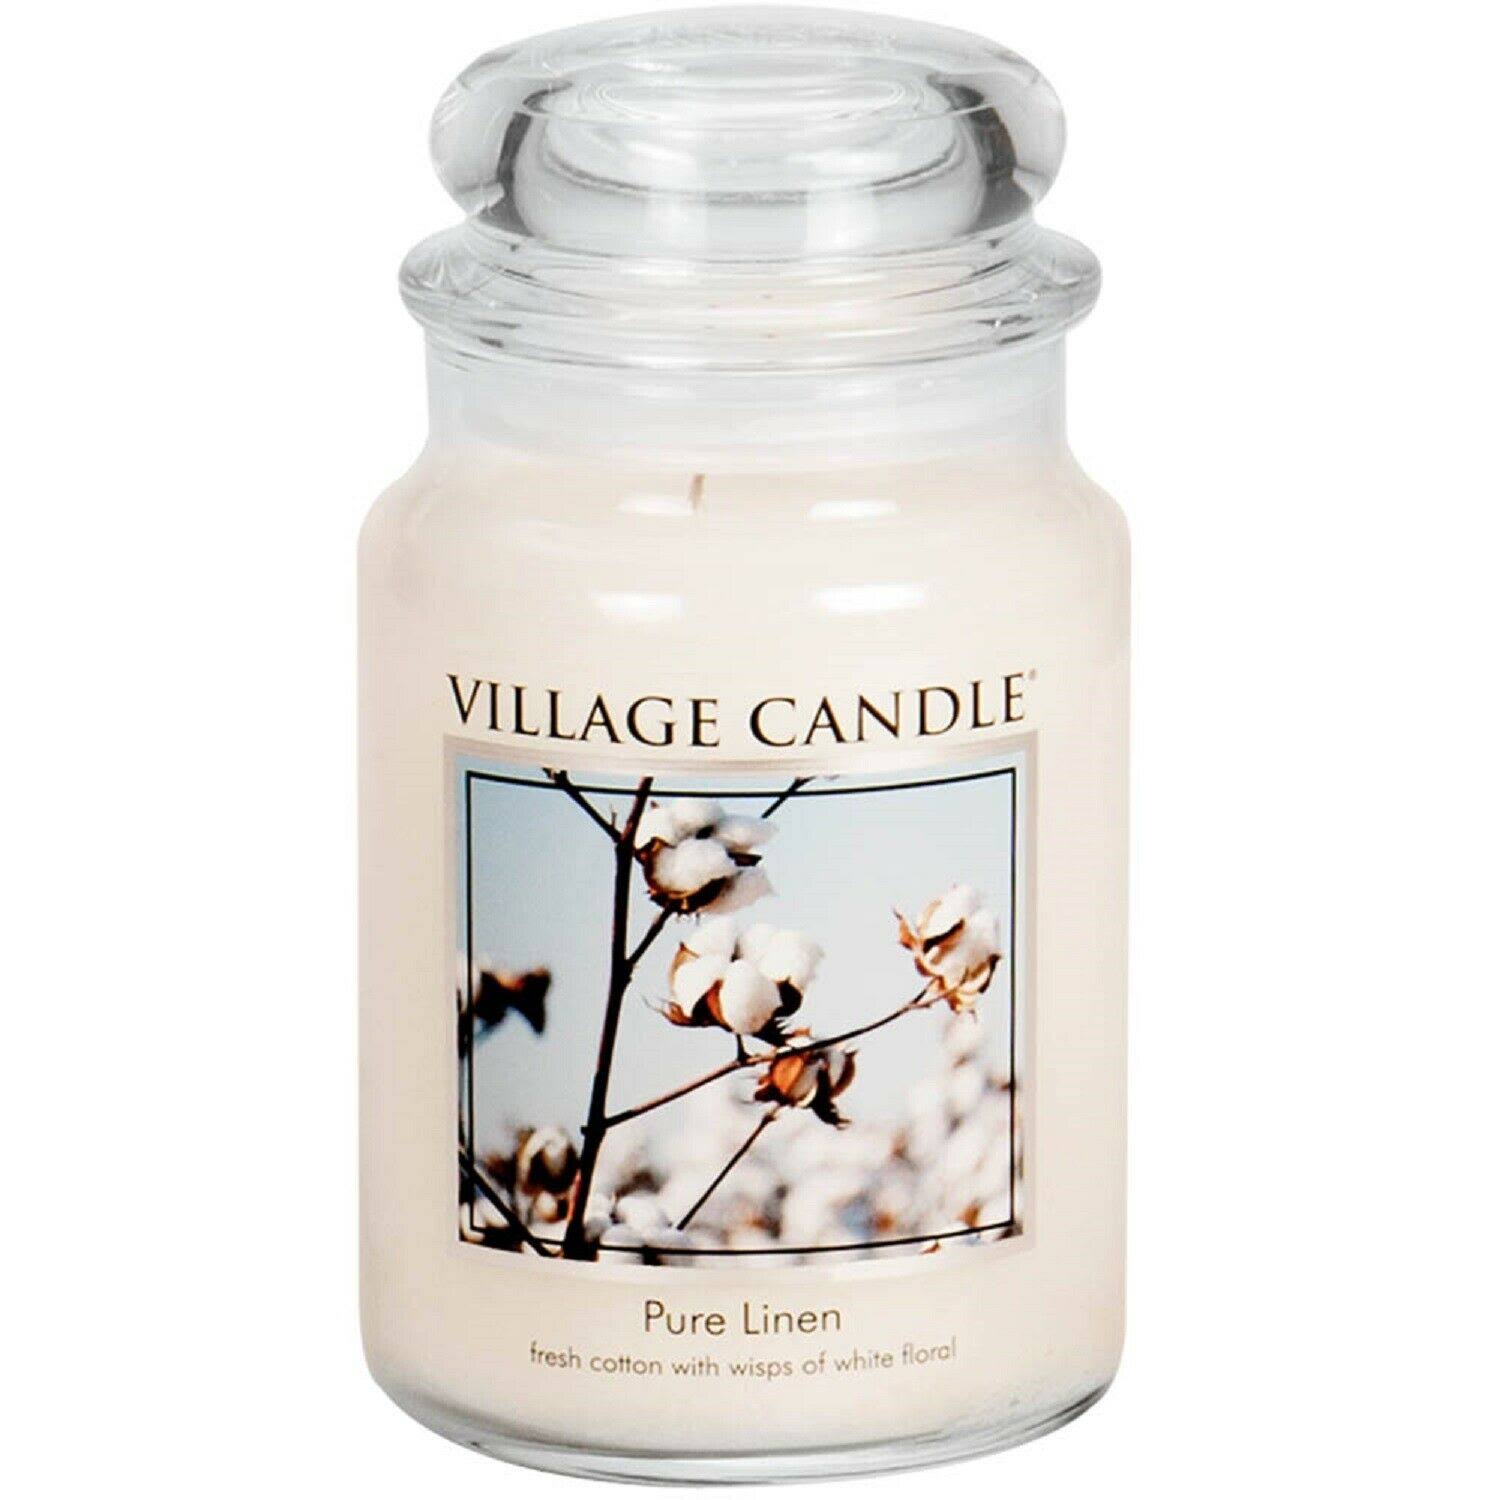 Village Candle Large Jar Candle - Pure Linen